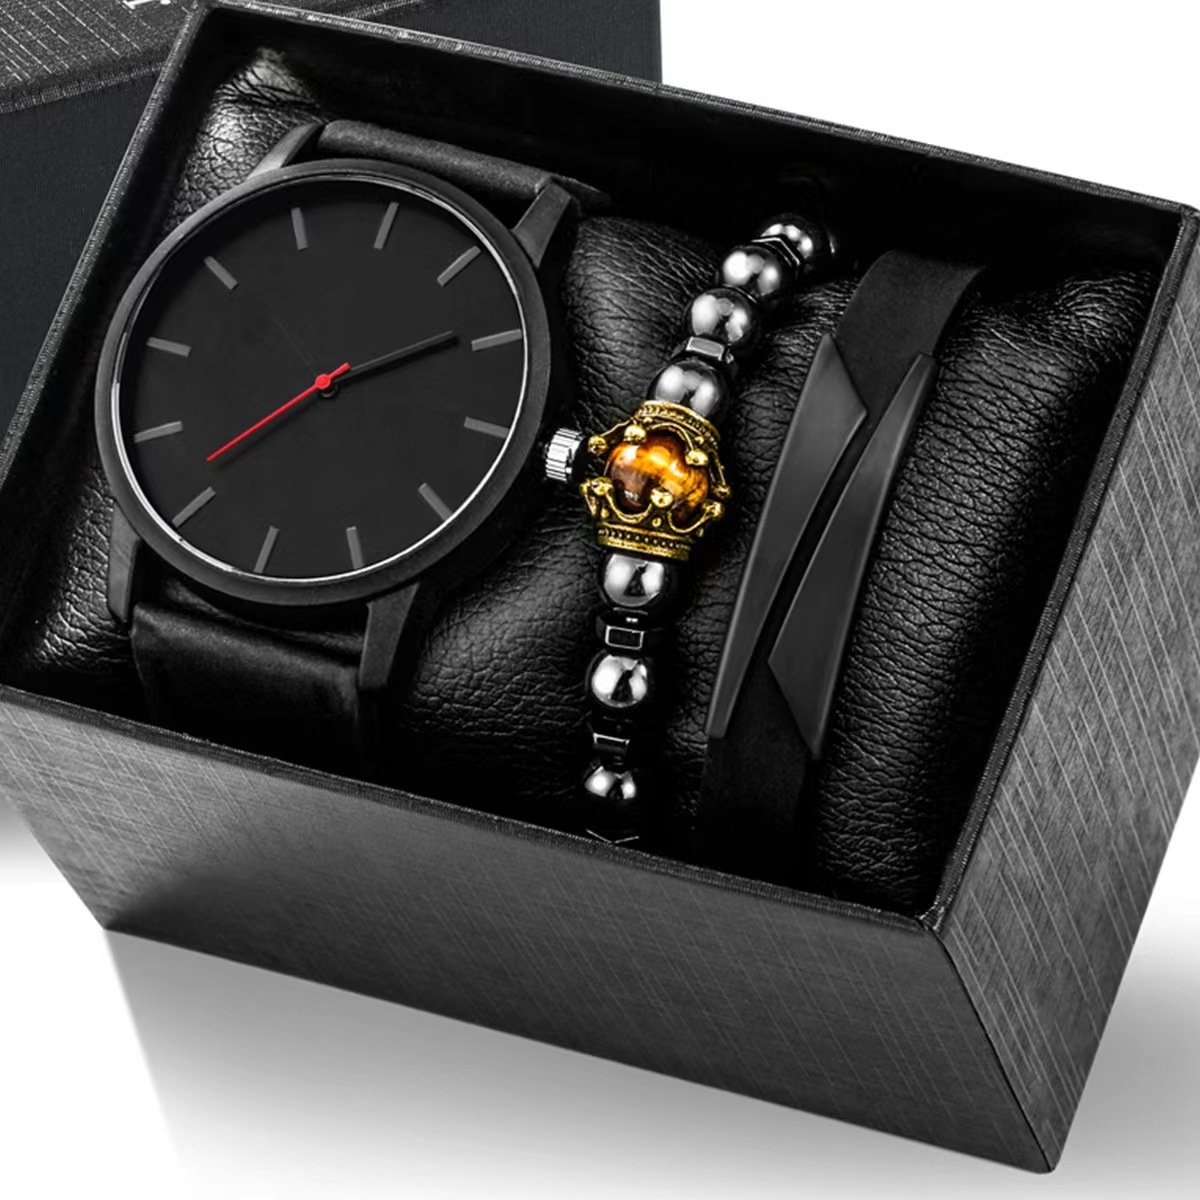 5 watch, bracelet and box